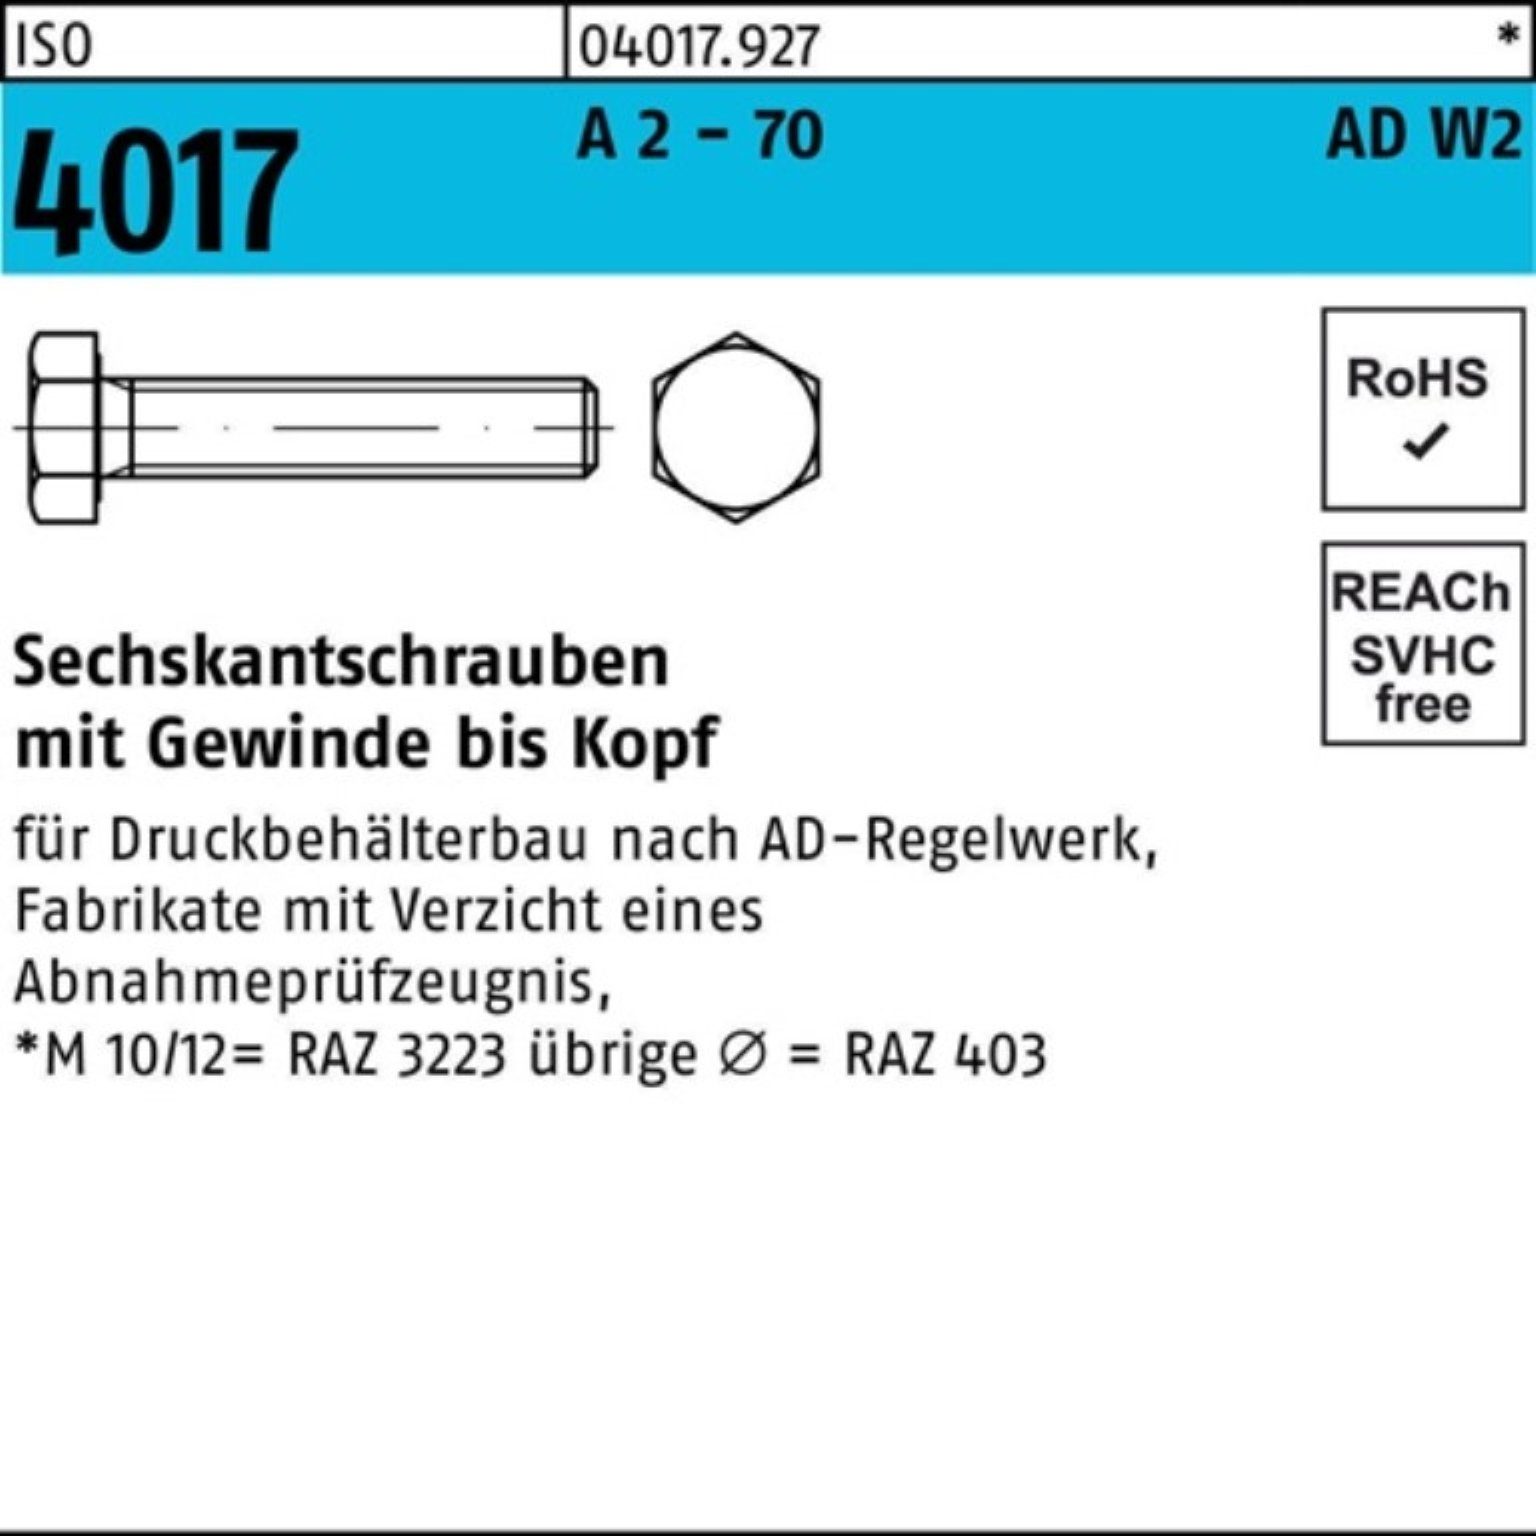 ISO - Sechskantschraube 2 4017 AD-W2 50 VG Sechskantschraube 70 Bufab A M12x Pack 70 100er St